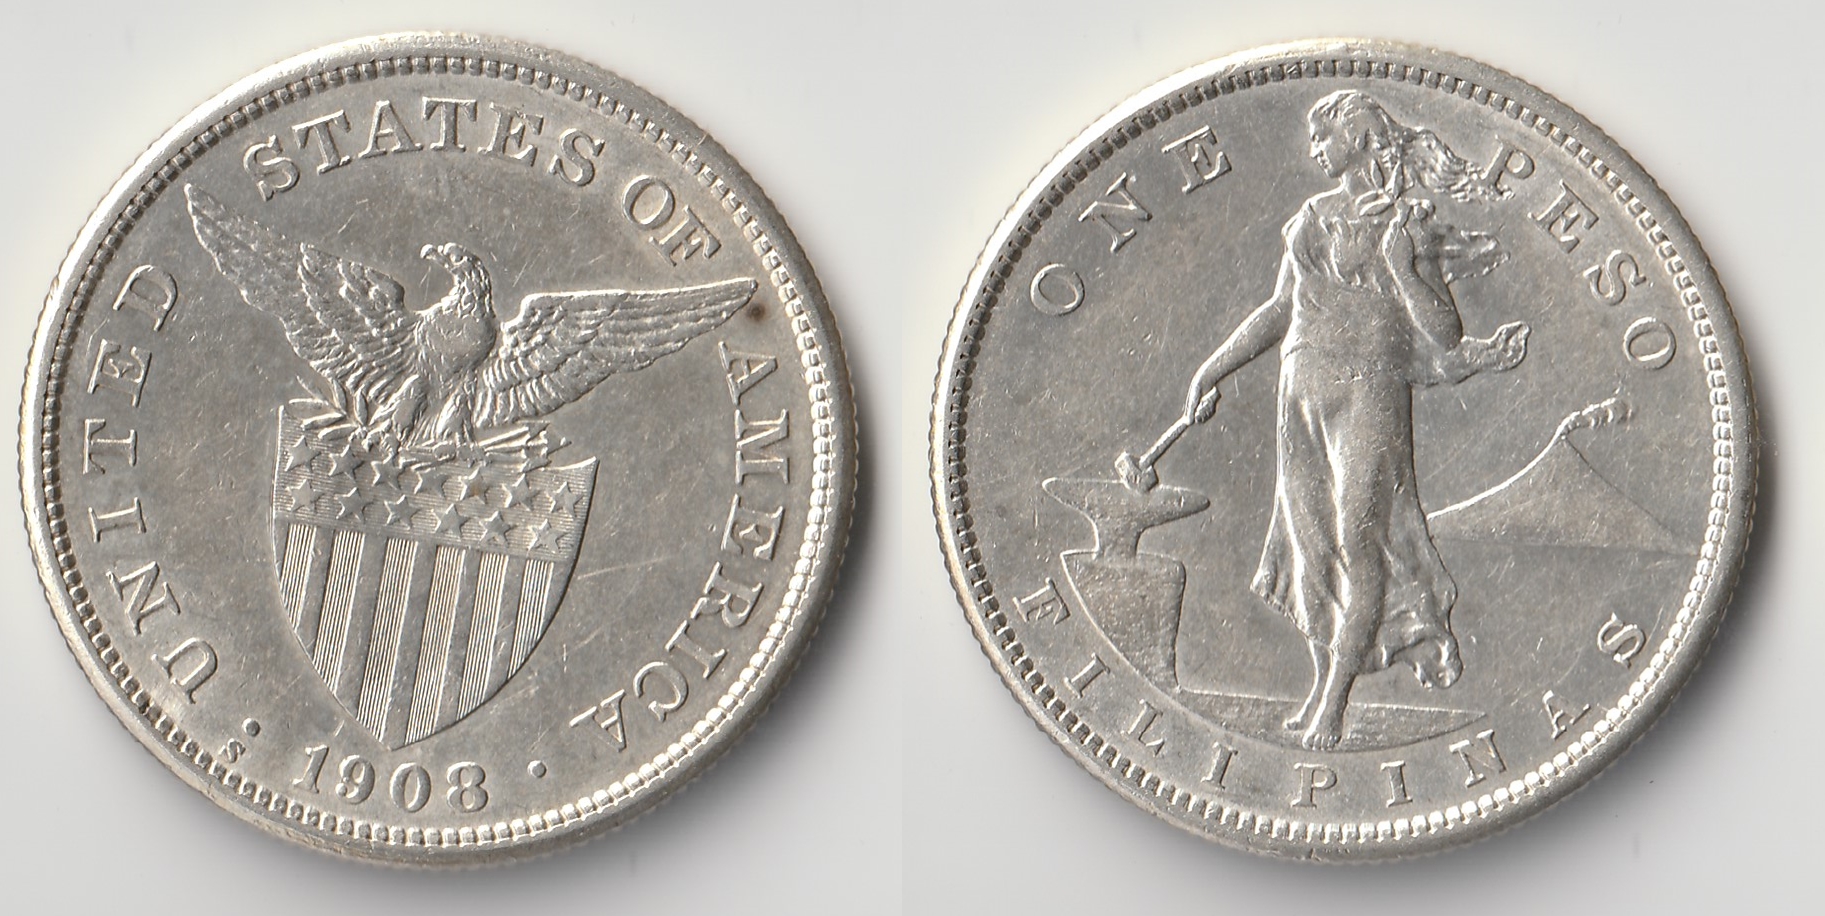 1908 s philippines 1 peso.jpg